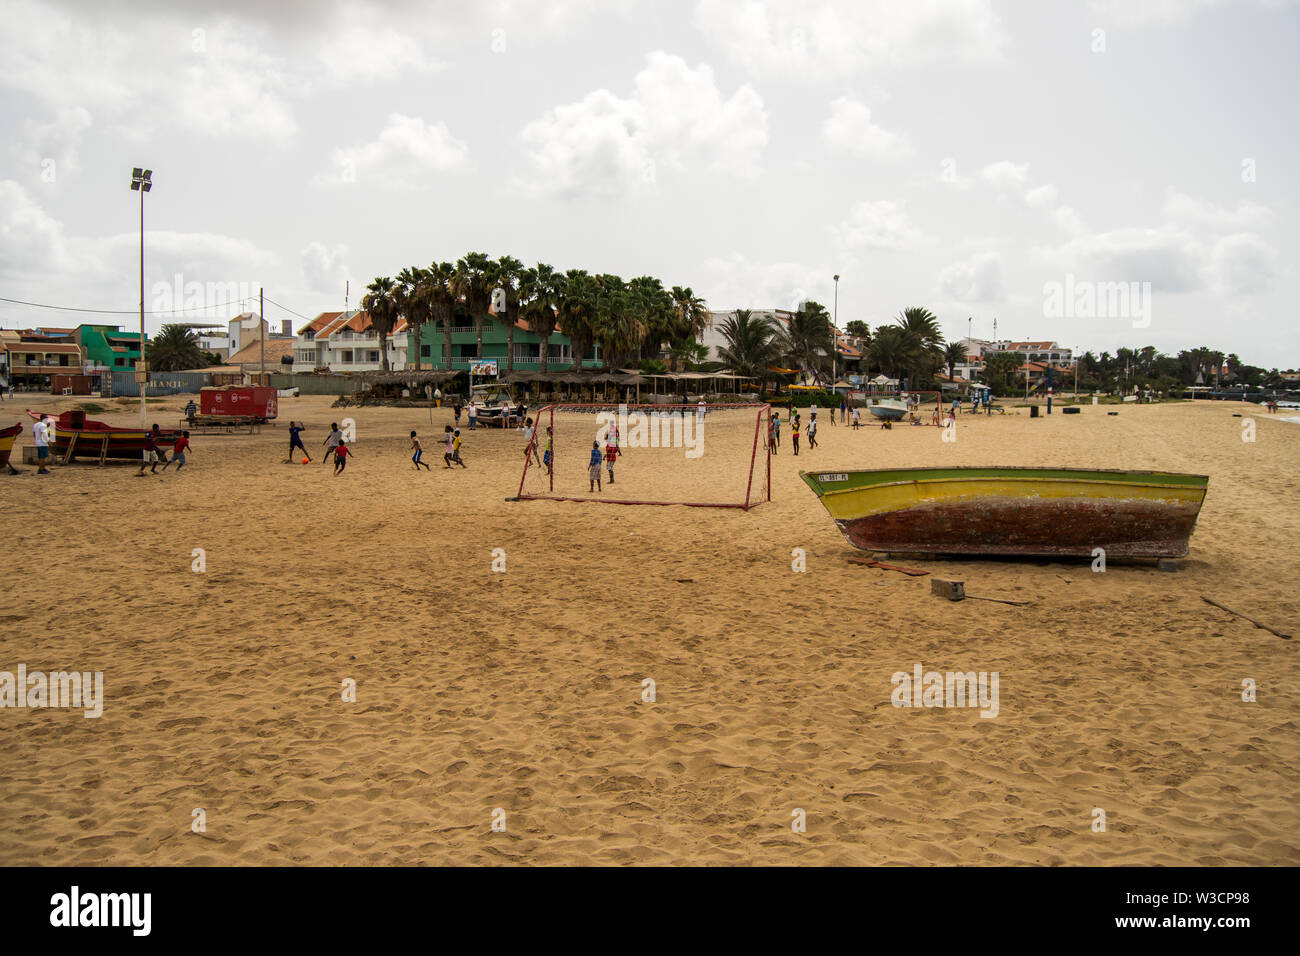 Cabo Verde, Cape Verde, Ilha do sal pontão praia de Santa Maria boat in the sand and kids playing football or soccer. Green Cape Island Kids. Stock Photo